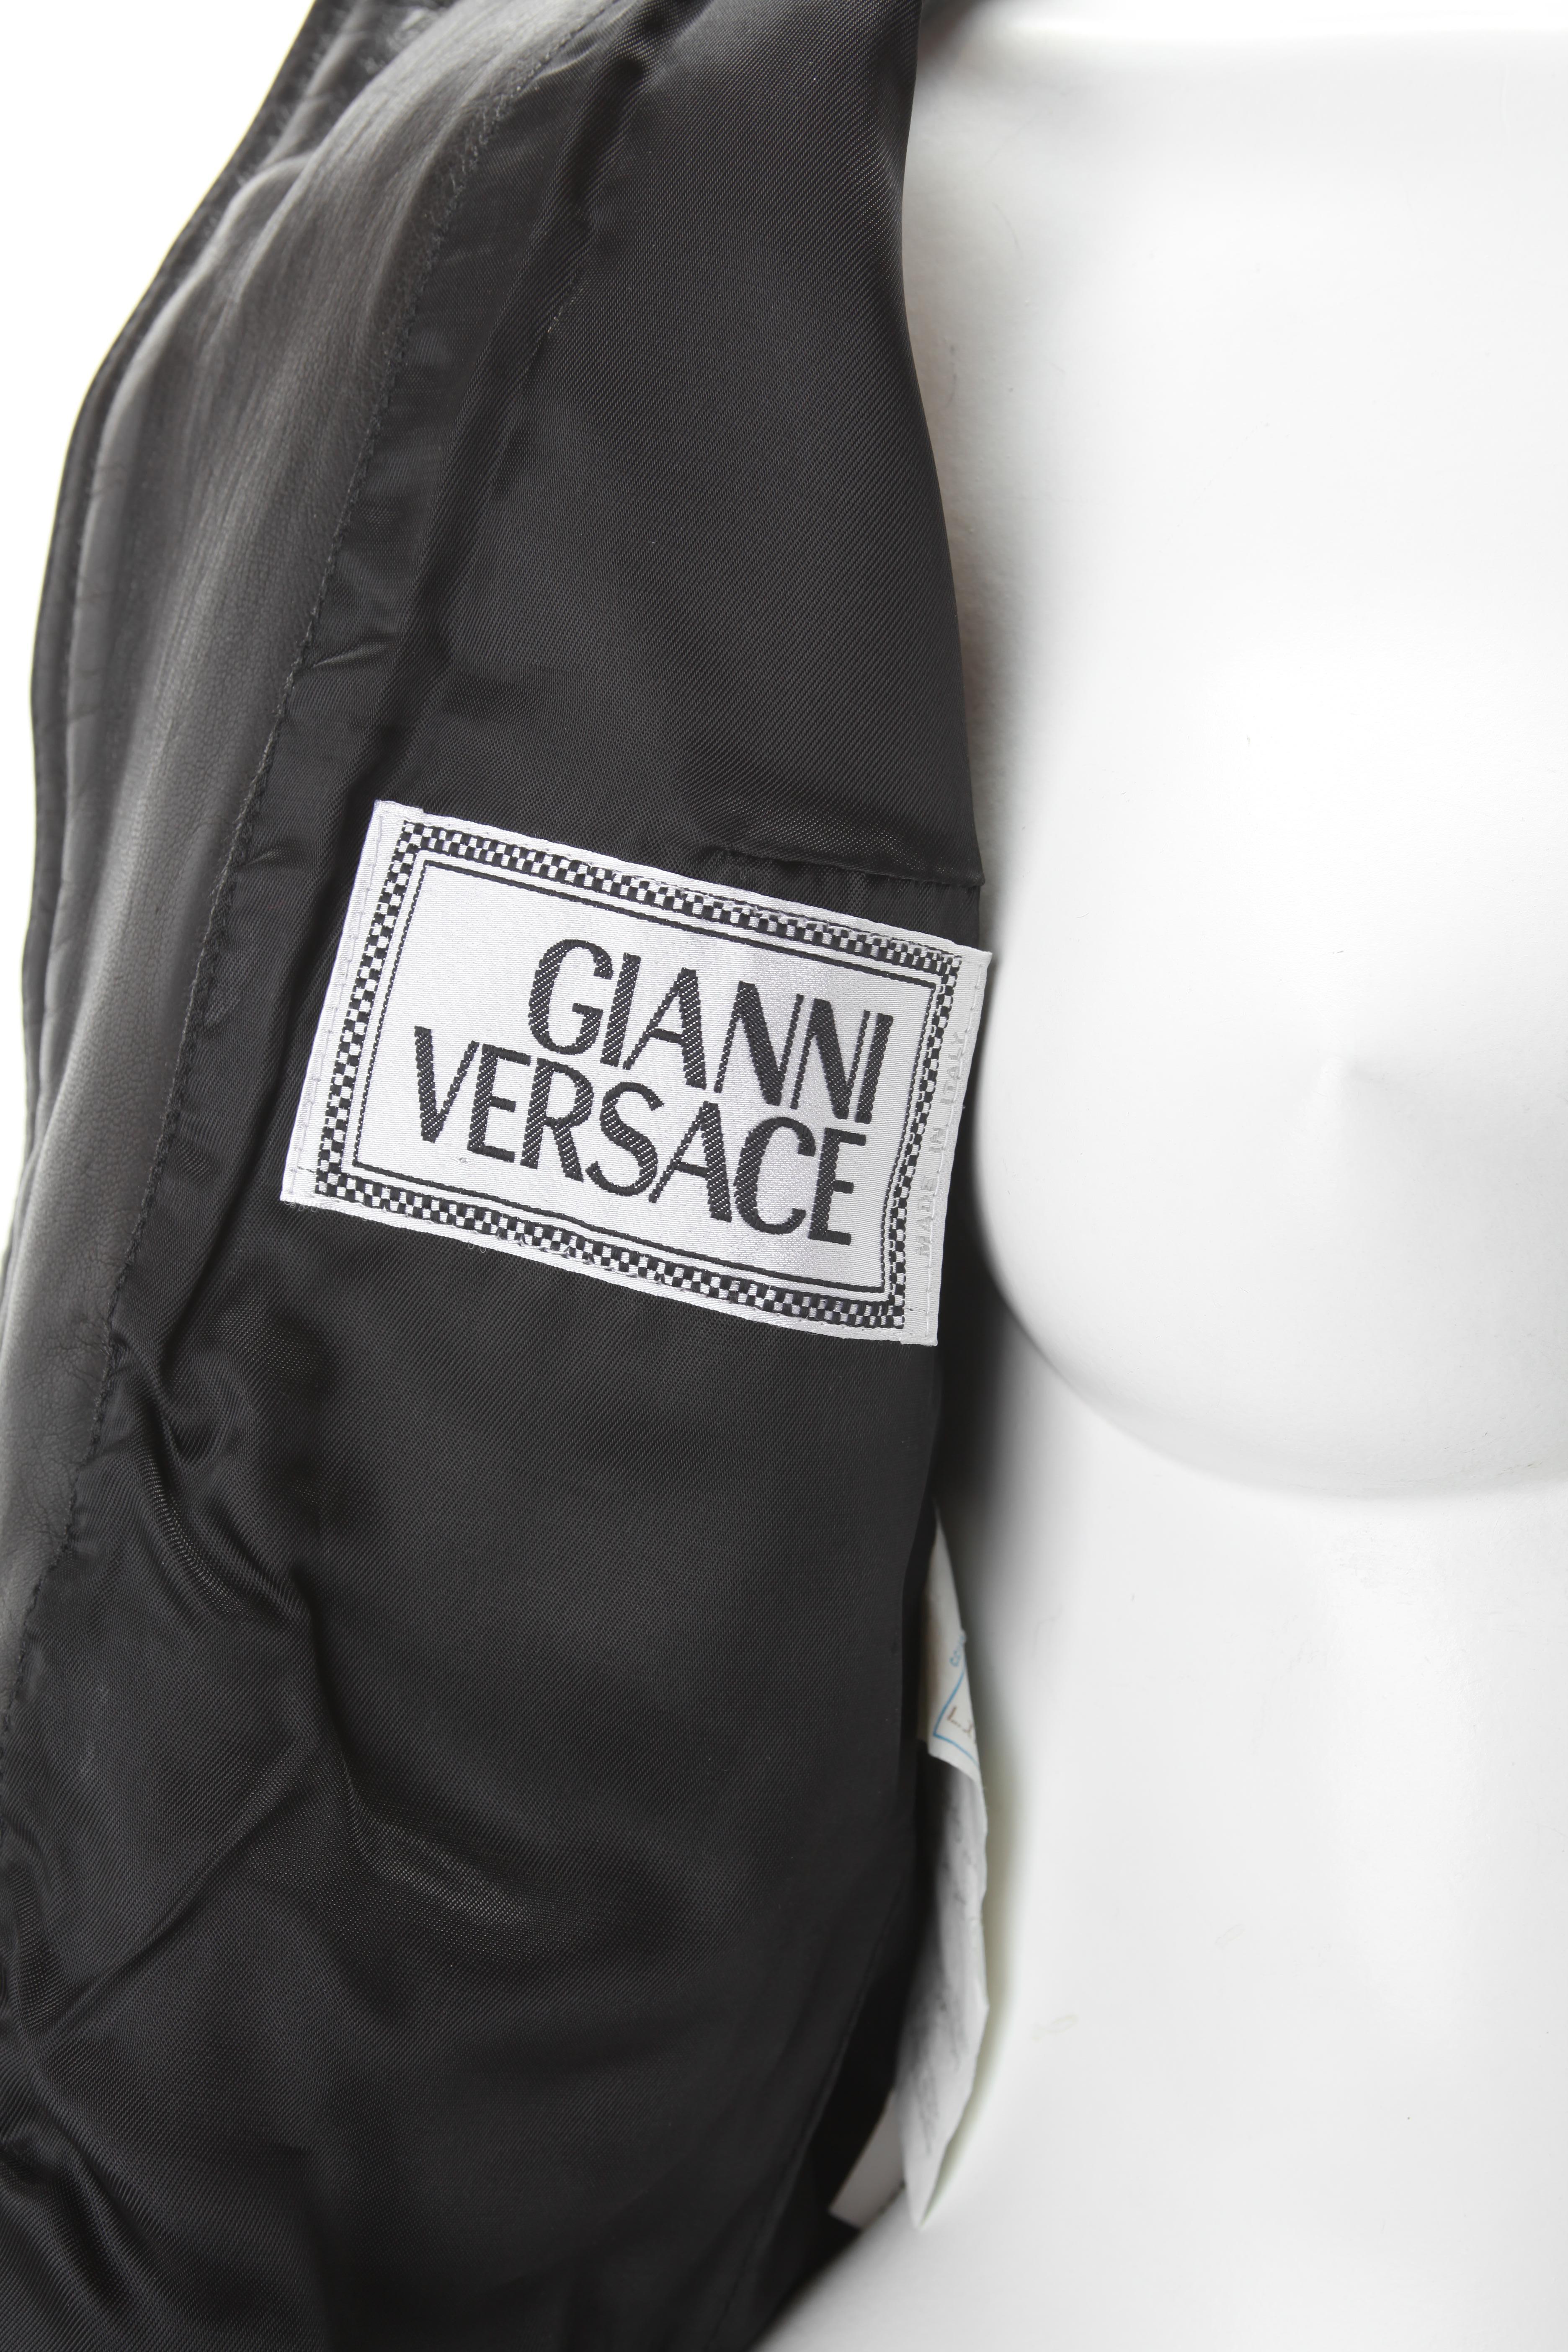 versace leather vest